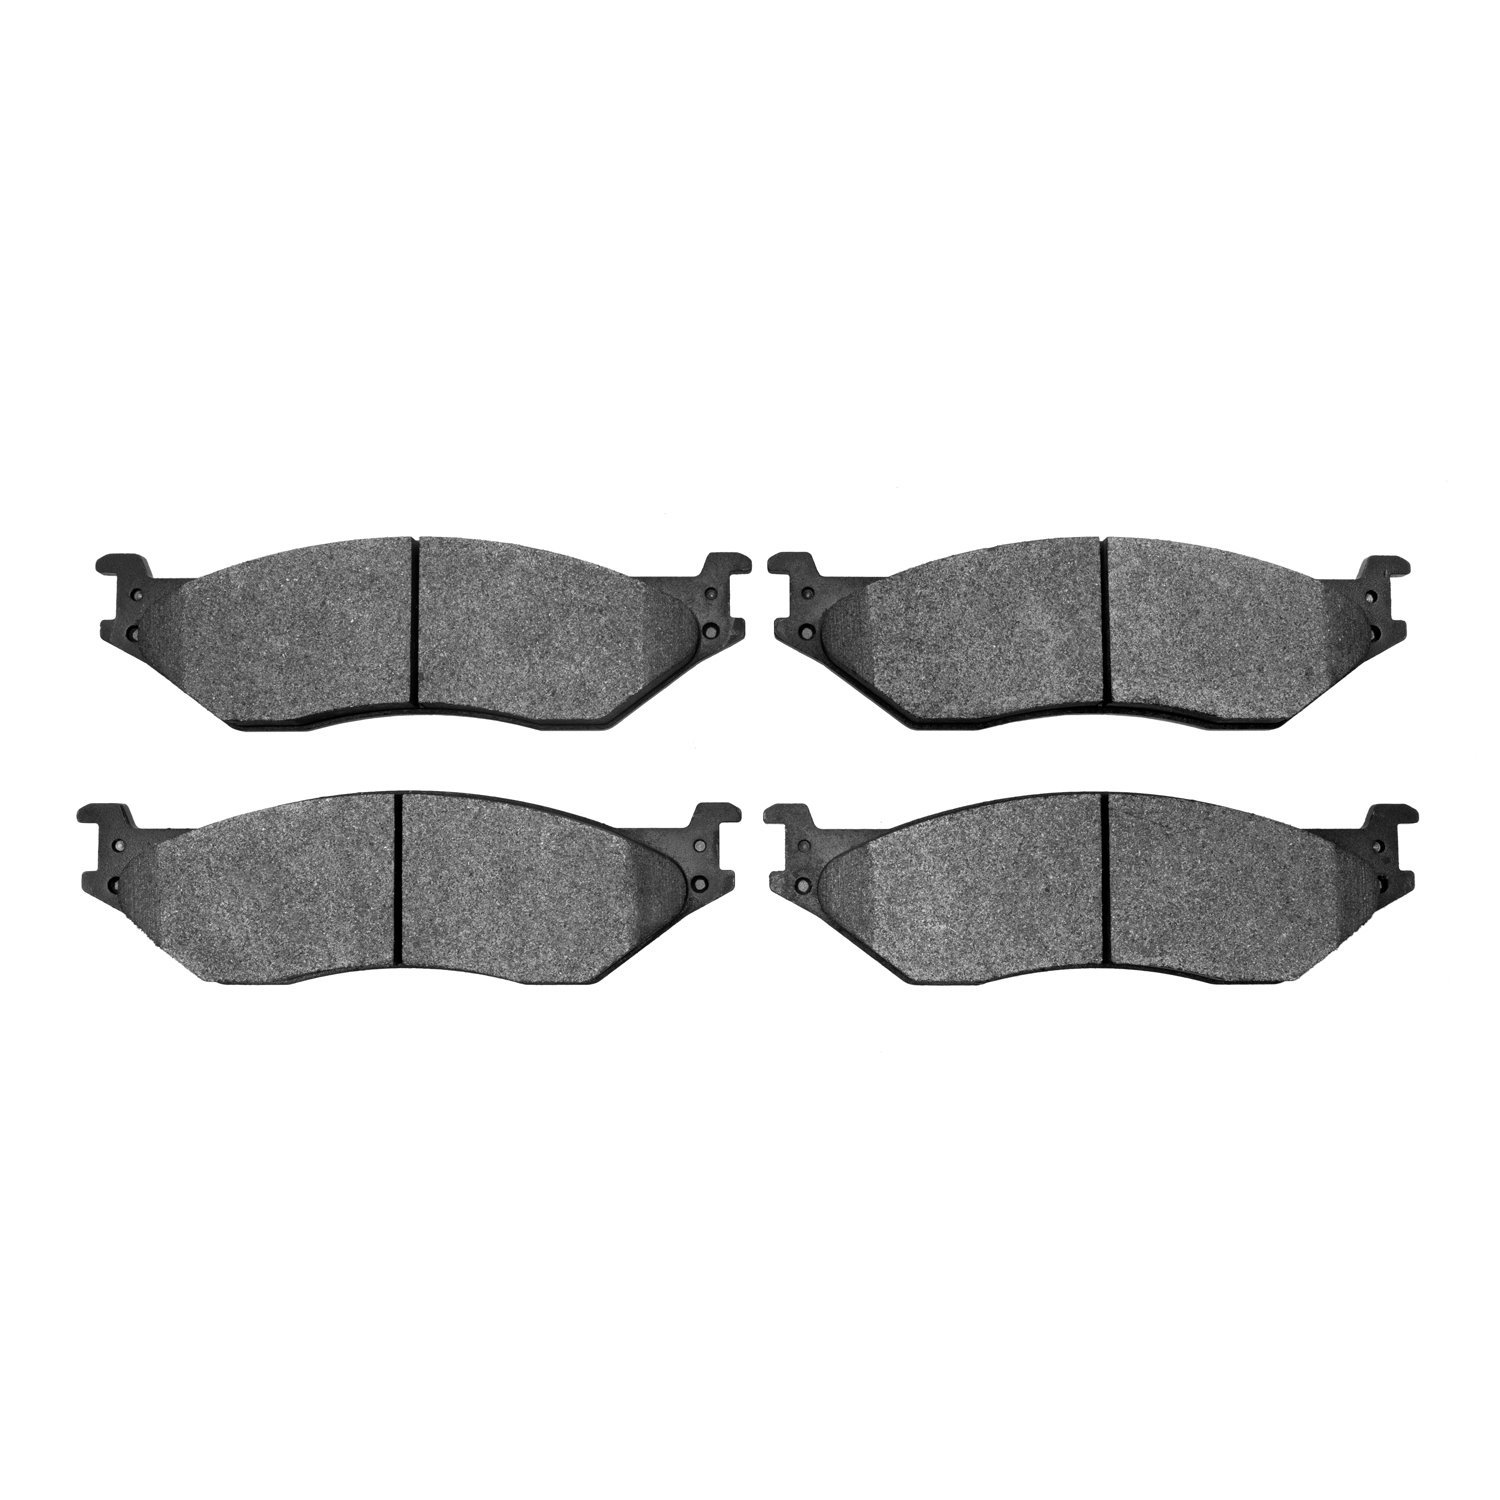 1311-1066-00 3000-Series Semi-Metallic Brake Pads, Fits Select Multiple Makes/Models, Position: Fr,Fr & Rr,Front,Rear,Rr